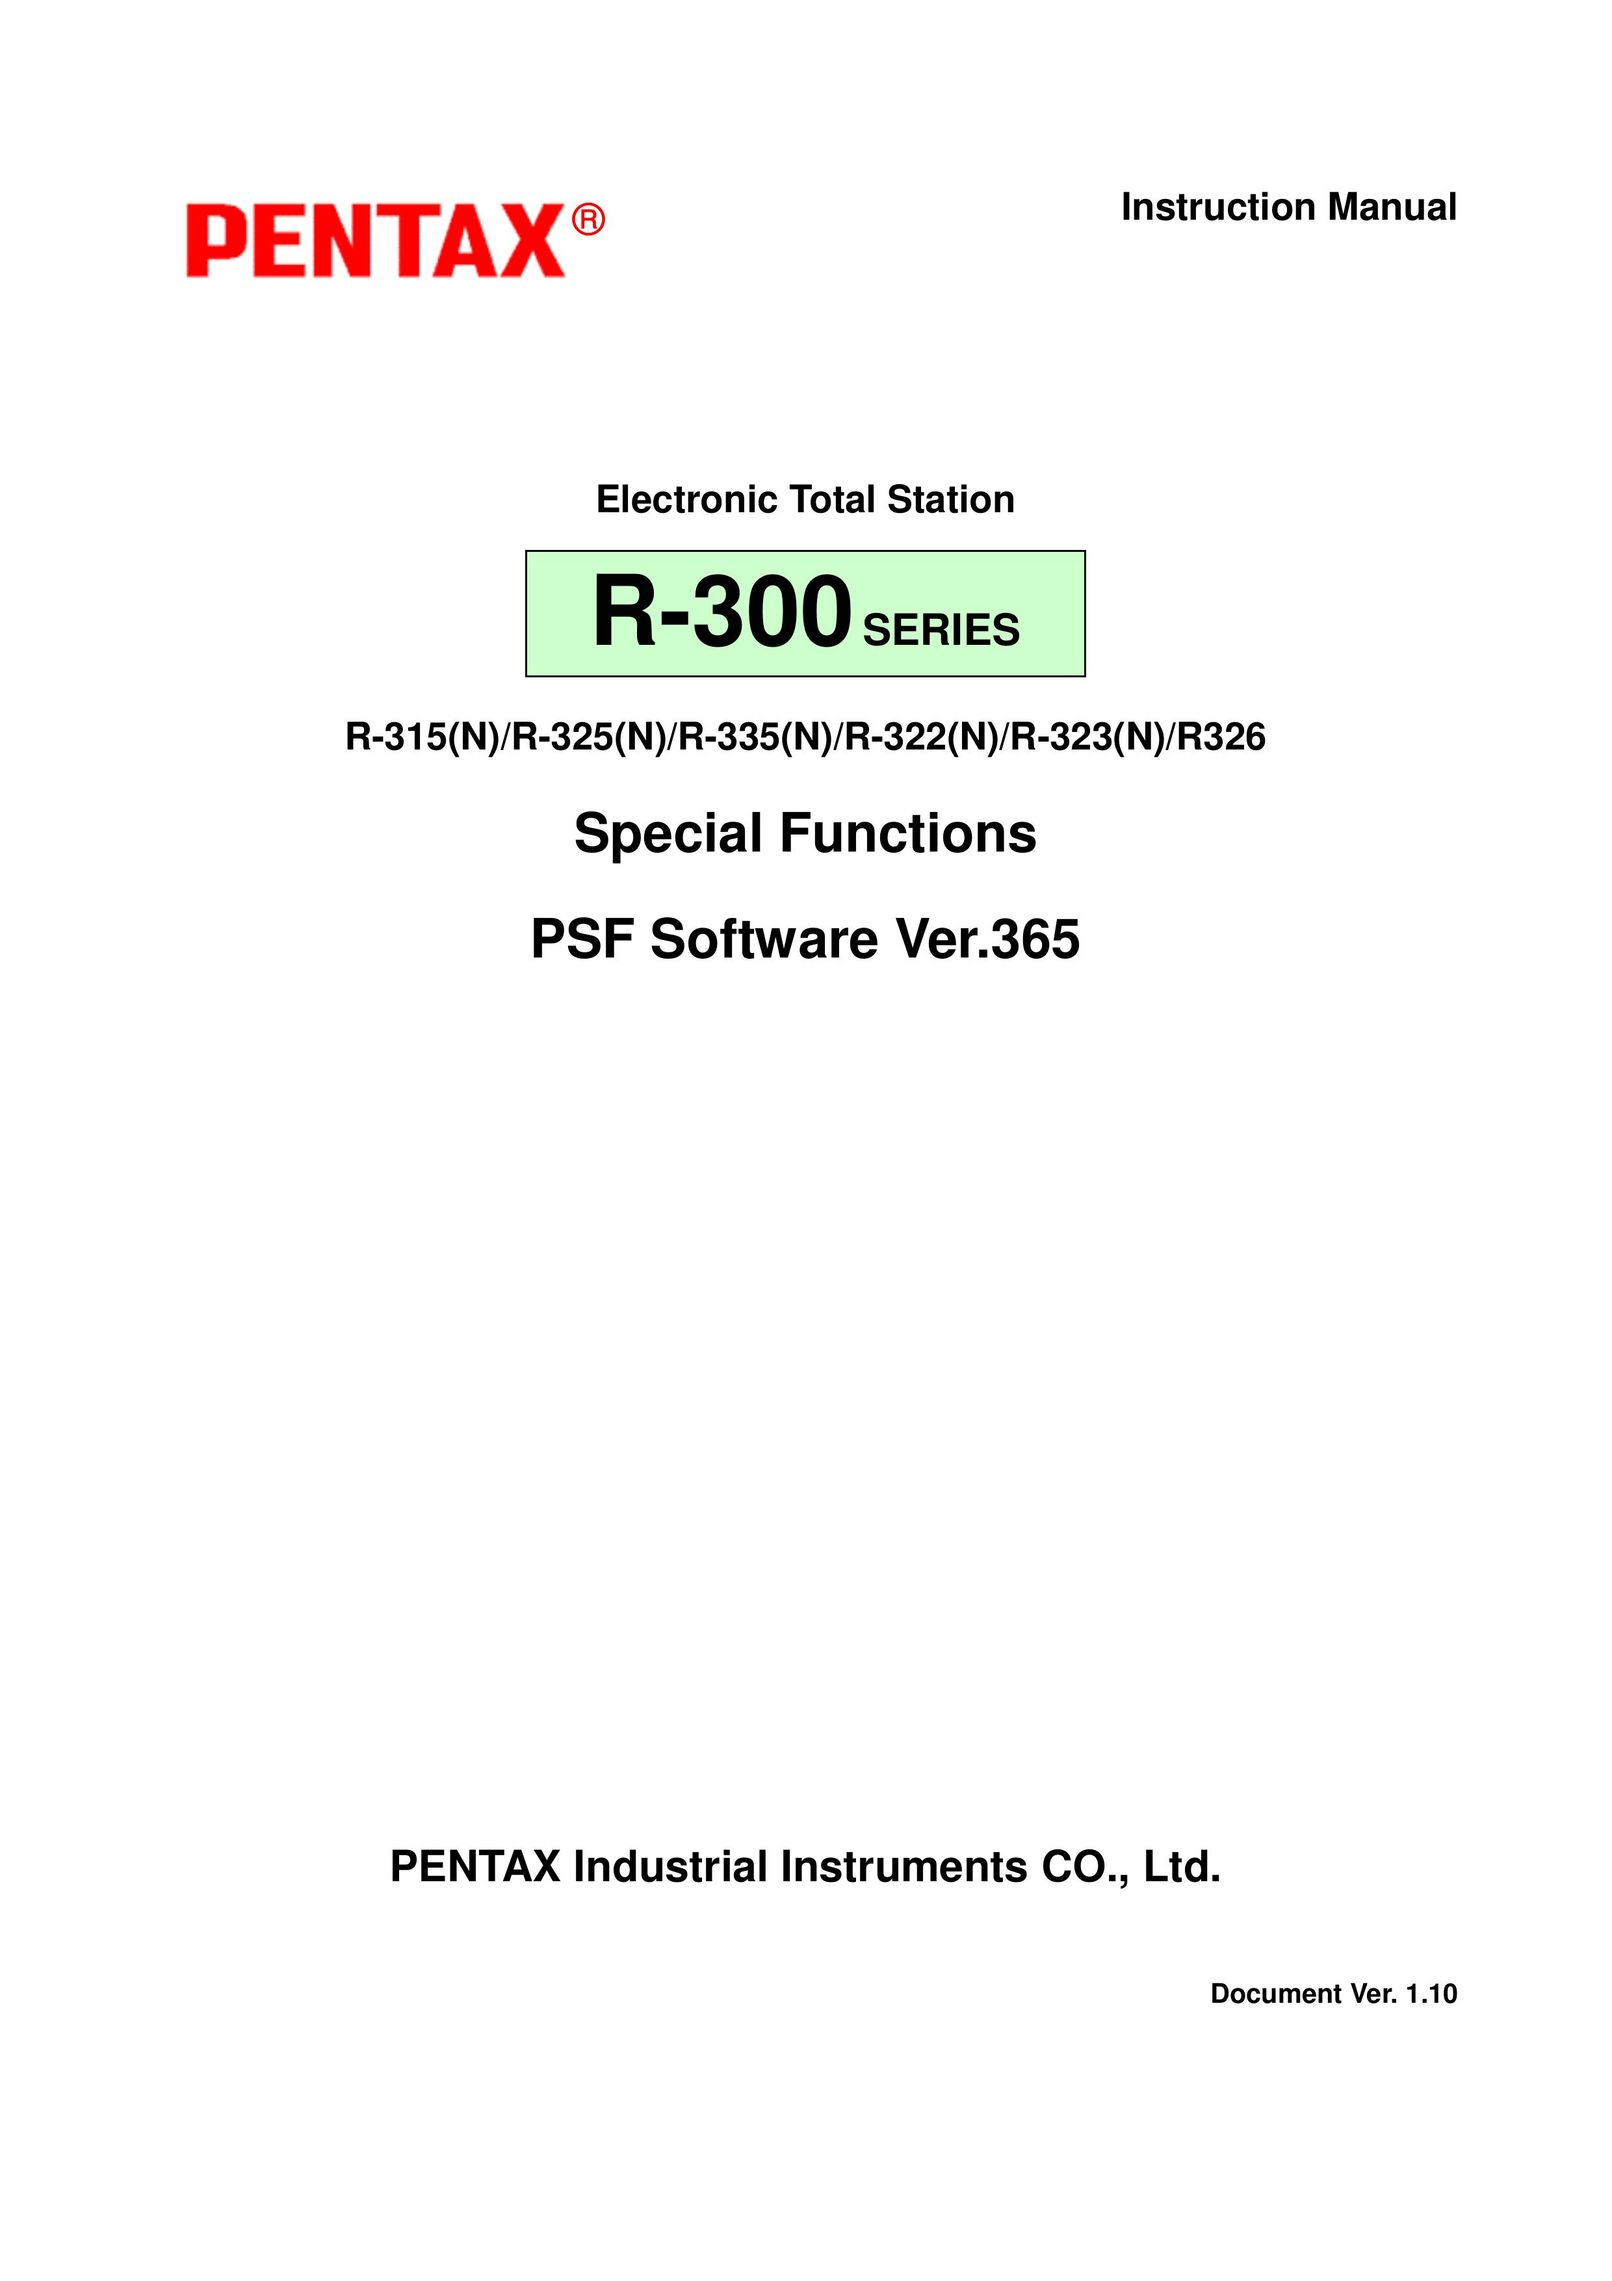 Pentax R-323(N) Home Gym User Manual